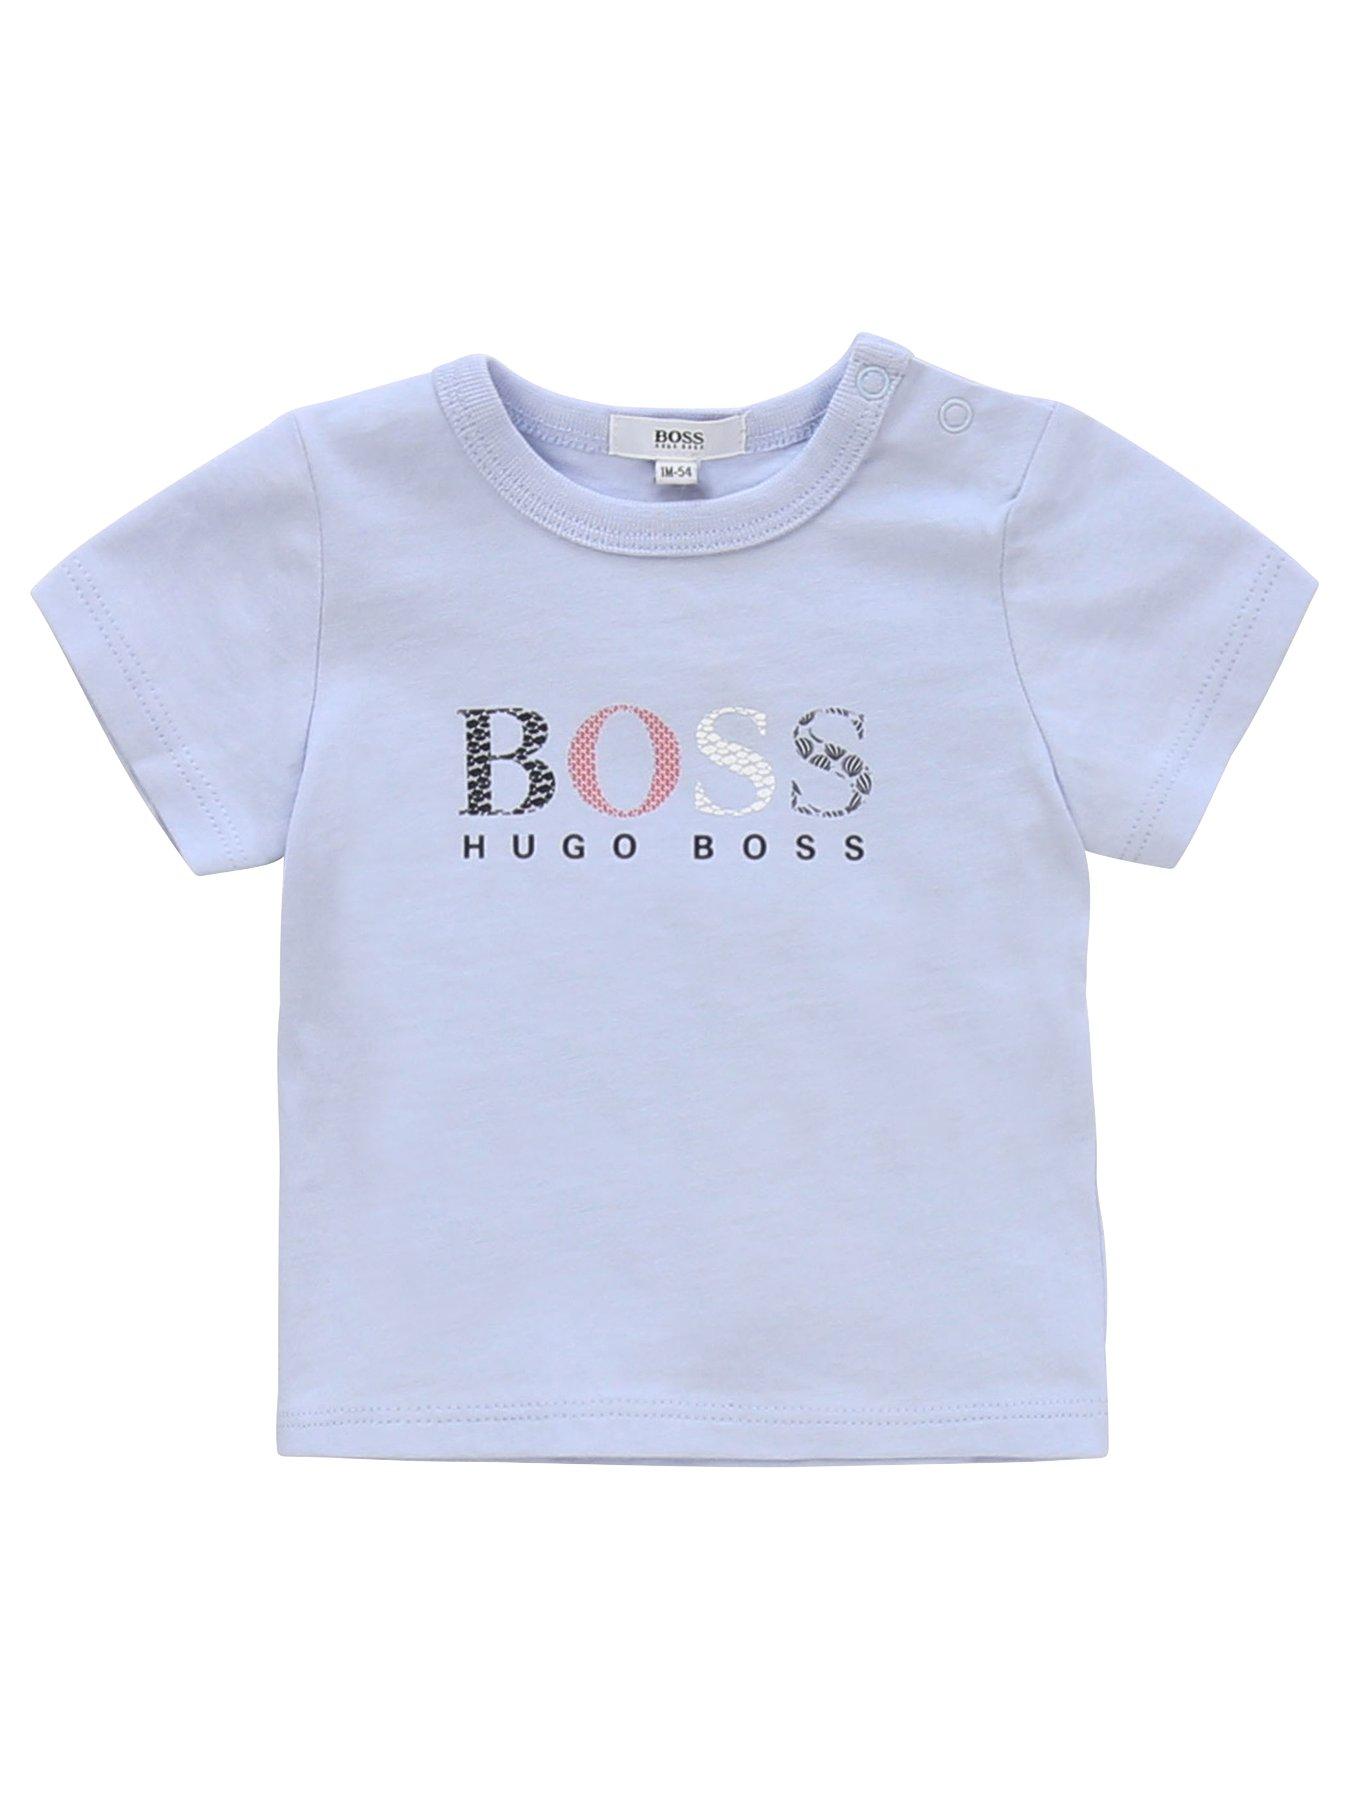 hugo boss baby boy t shirt